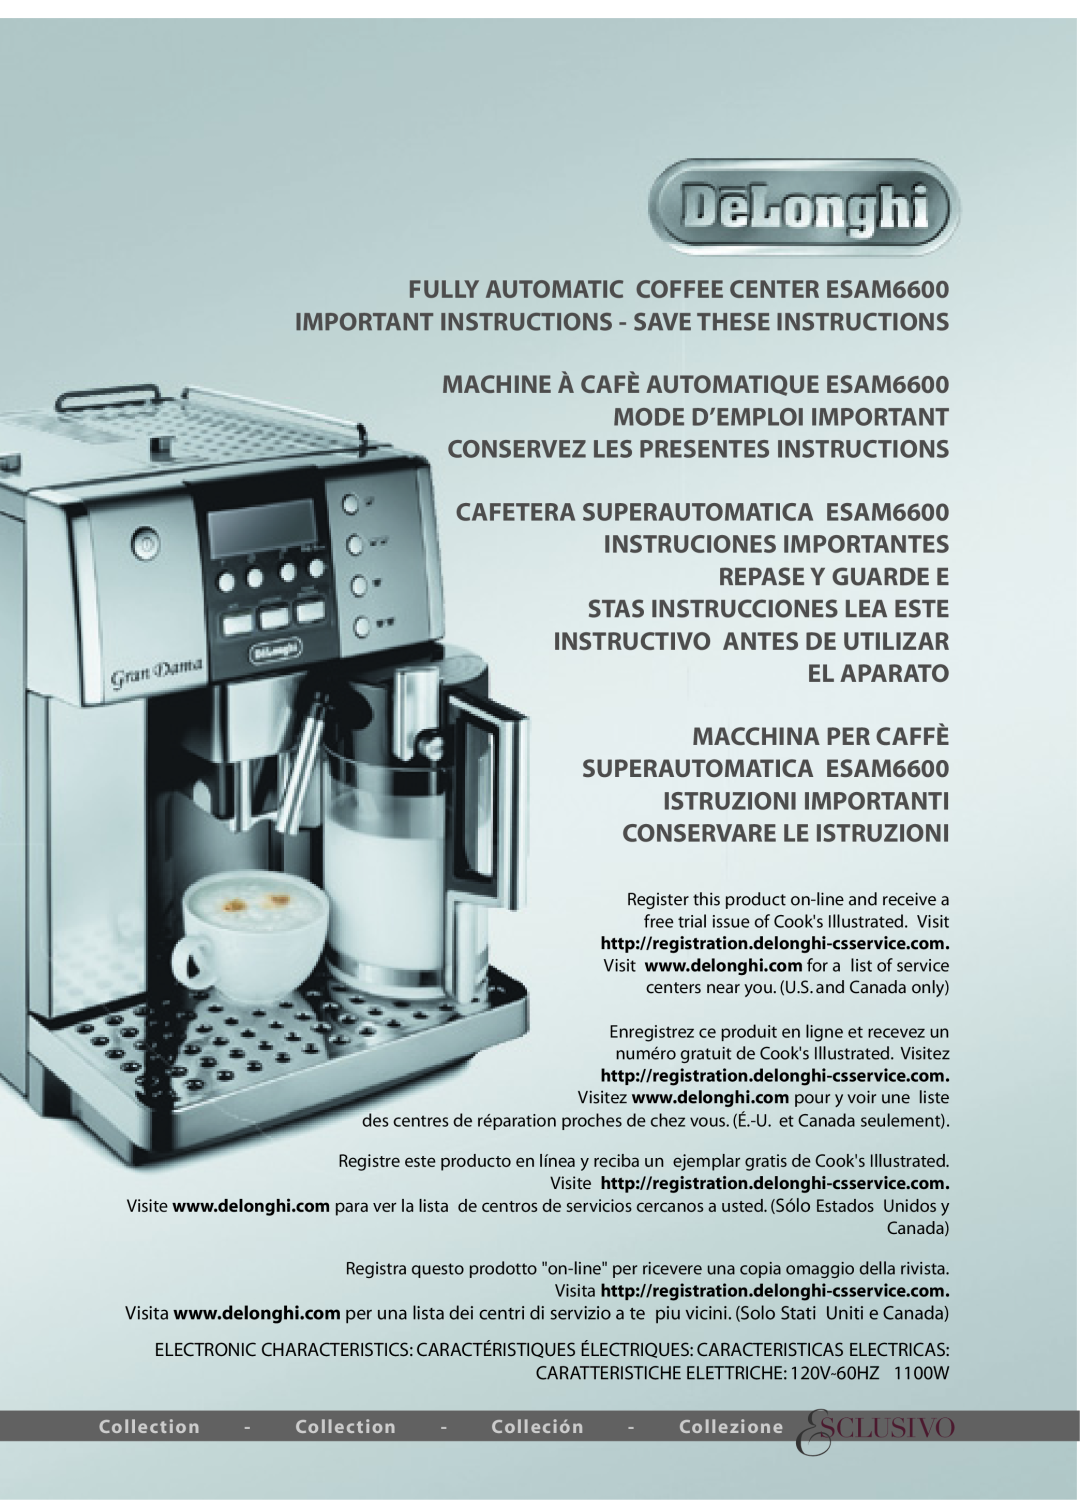 DeLonghi manual FULLY AUTOMATIC COFFEE CENTER ESAM6600 